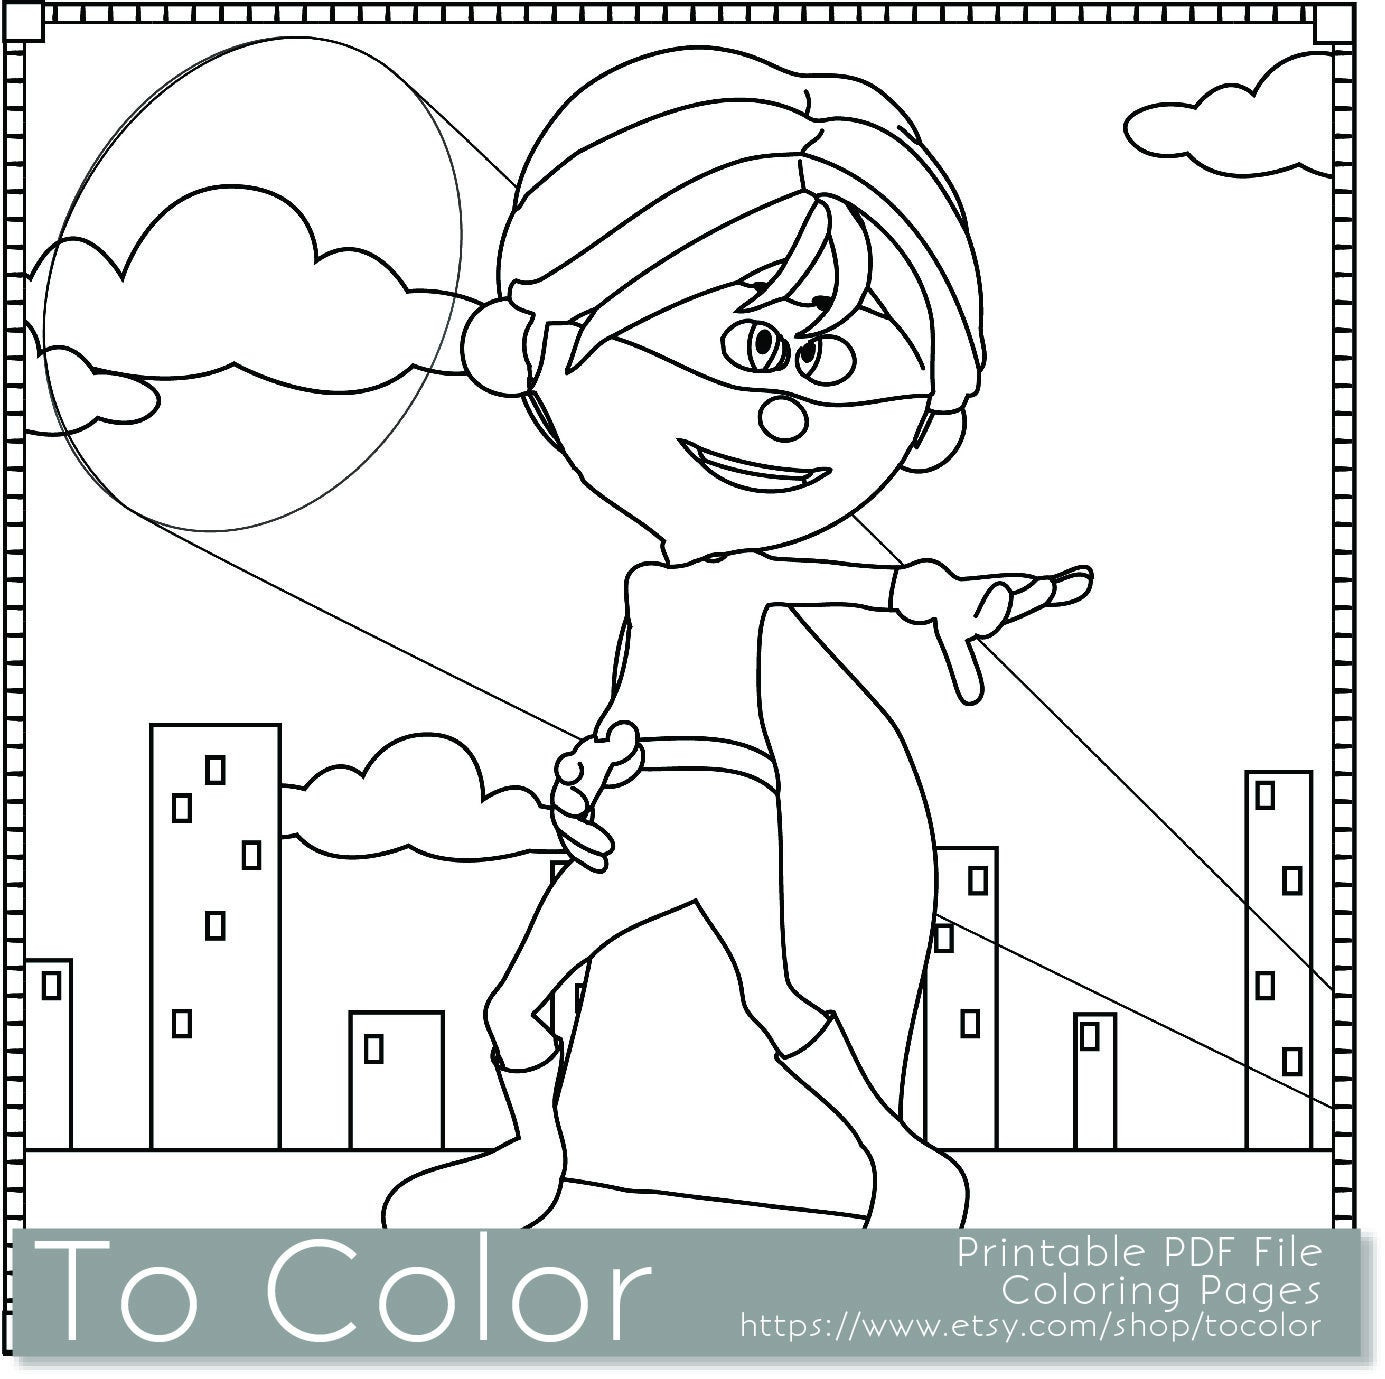 Superhero Boys Coloring Pages
 Superhero Coloring Page Printable Boy Coloring Page by ToColor